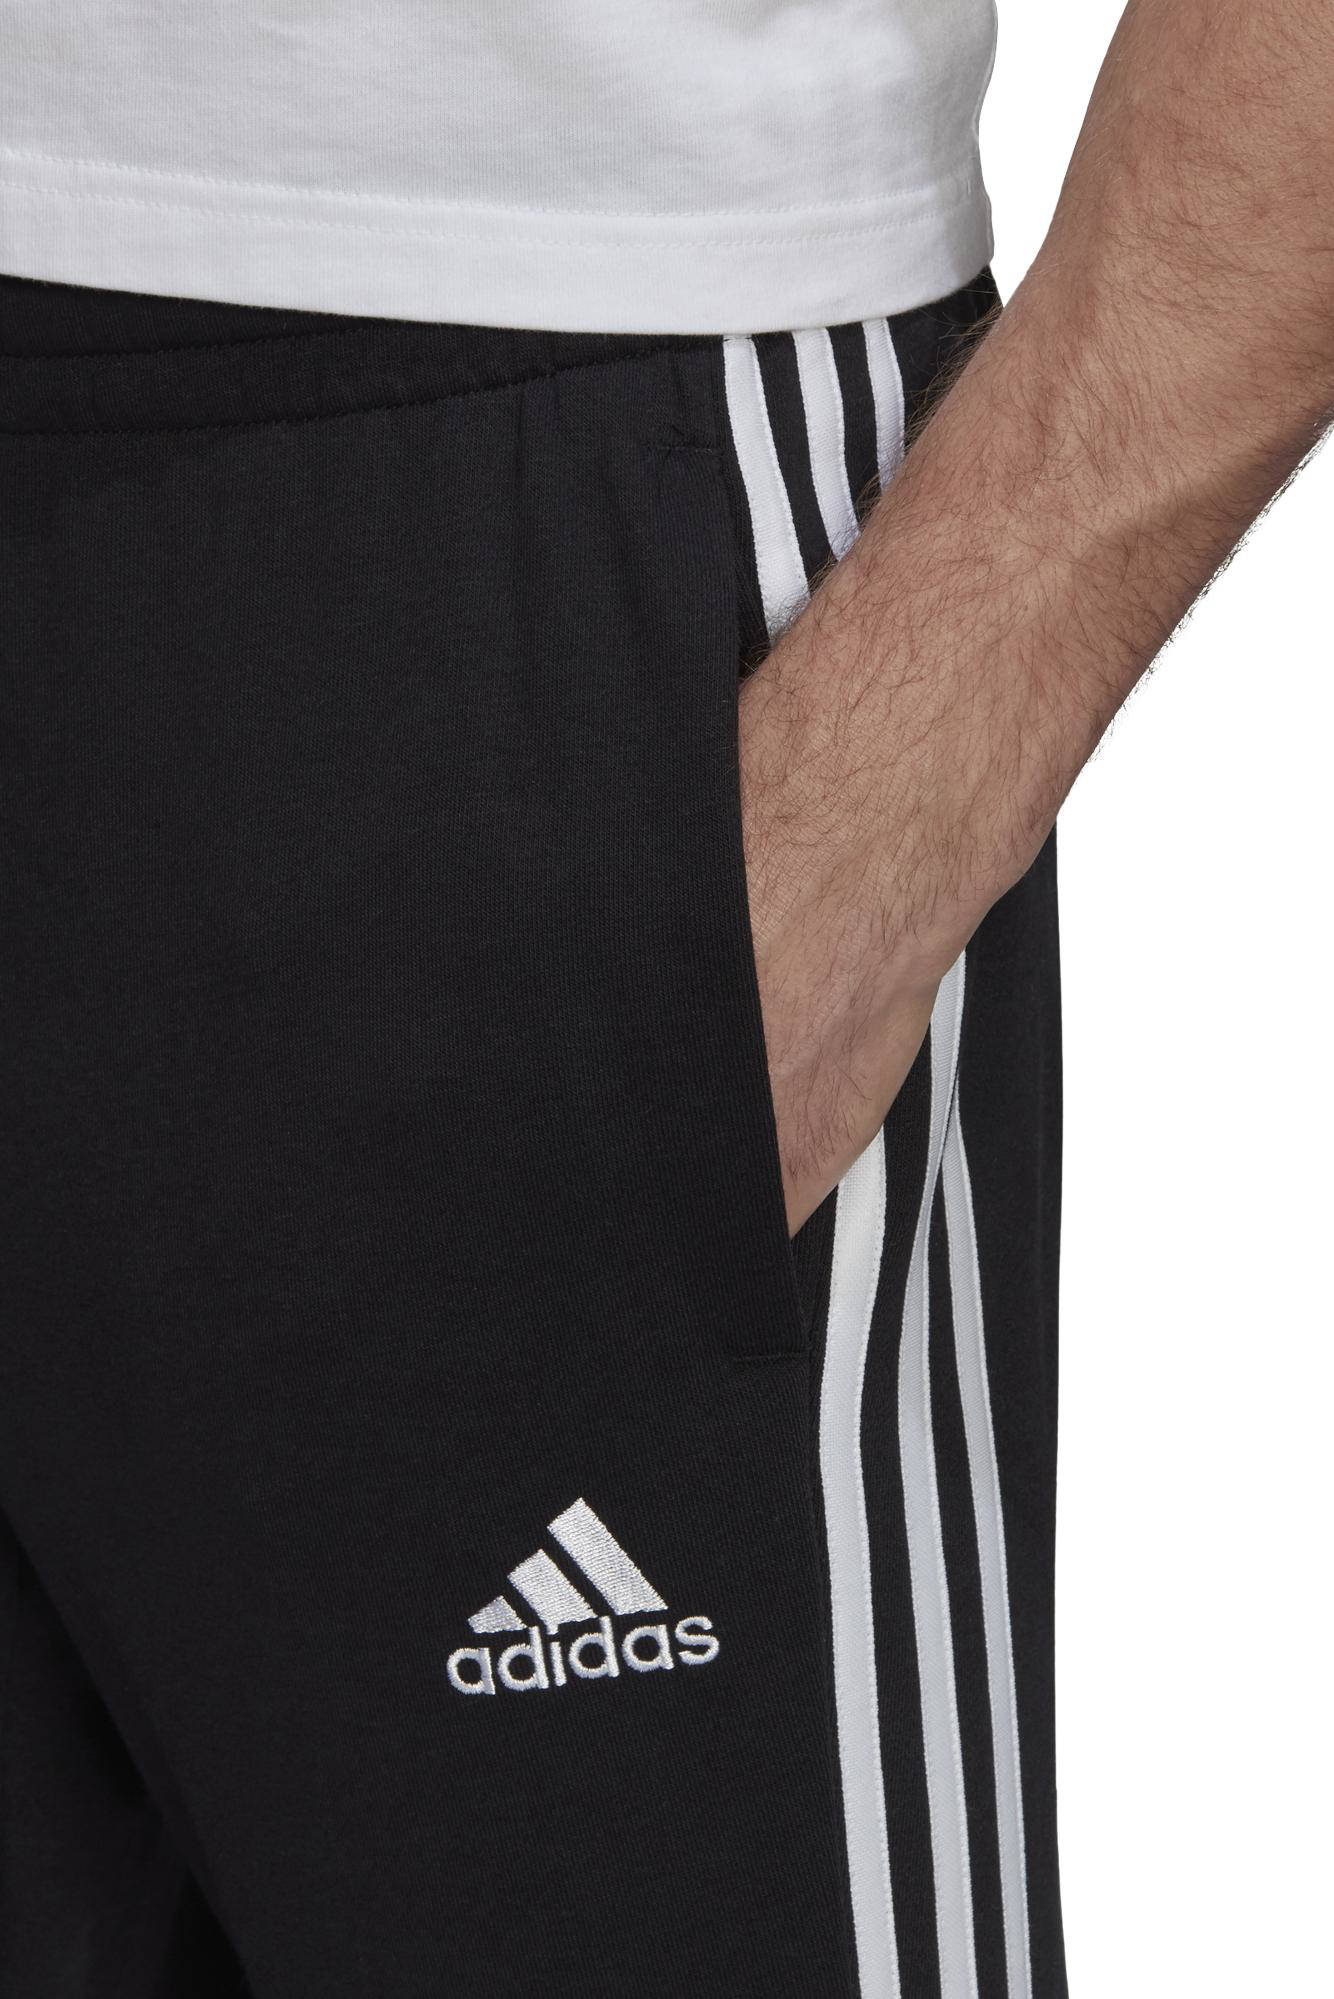 adidas Performance joggingbroek zwart/wit | wehkamp